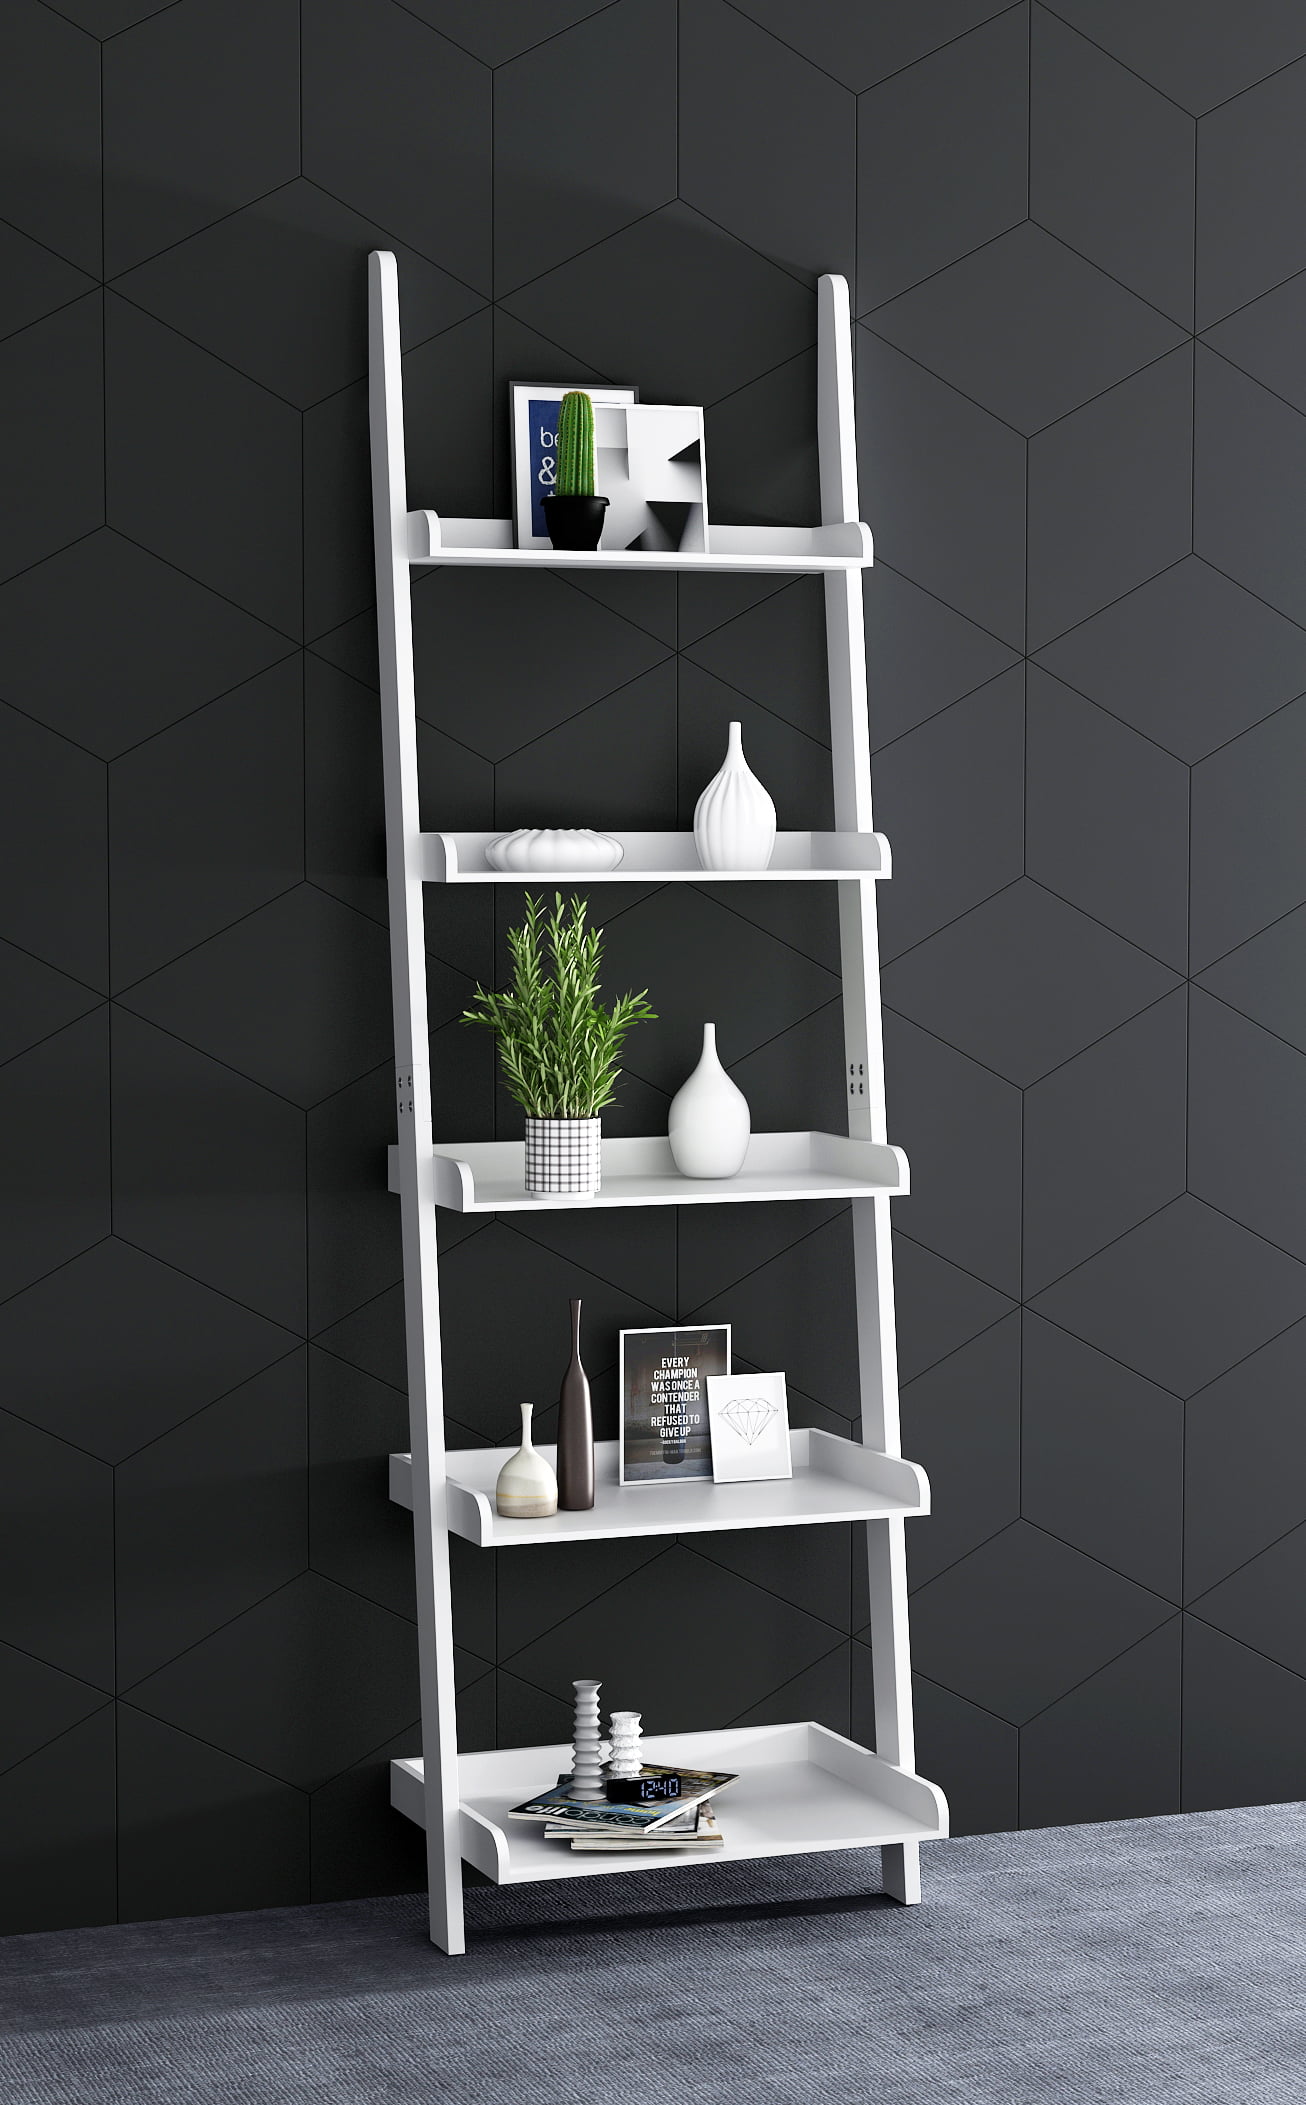 leaning book shelves